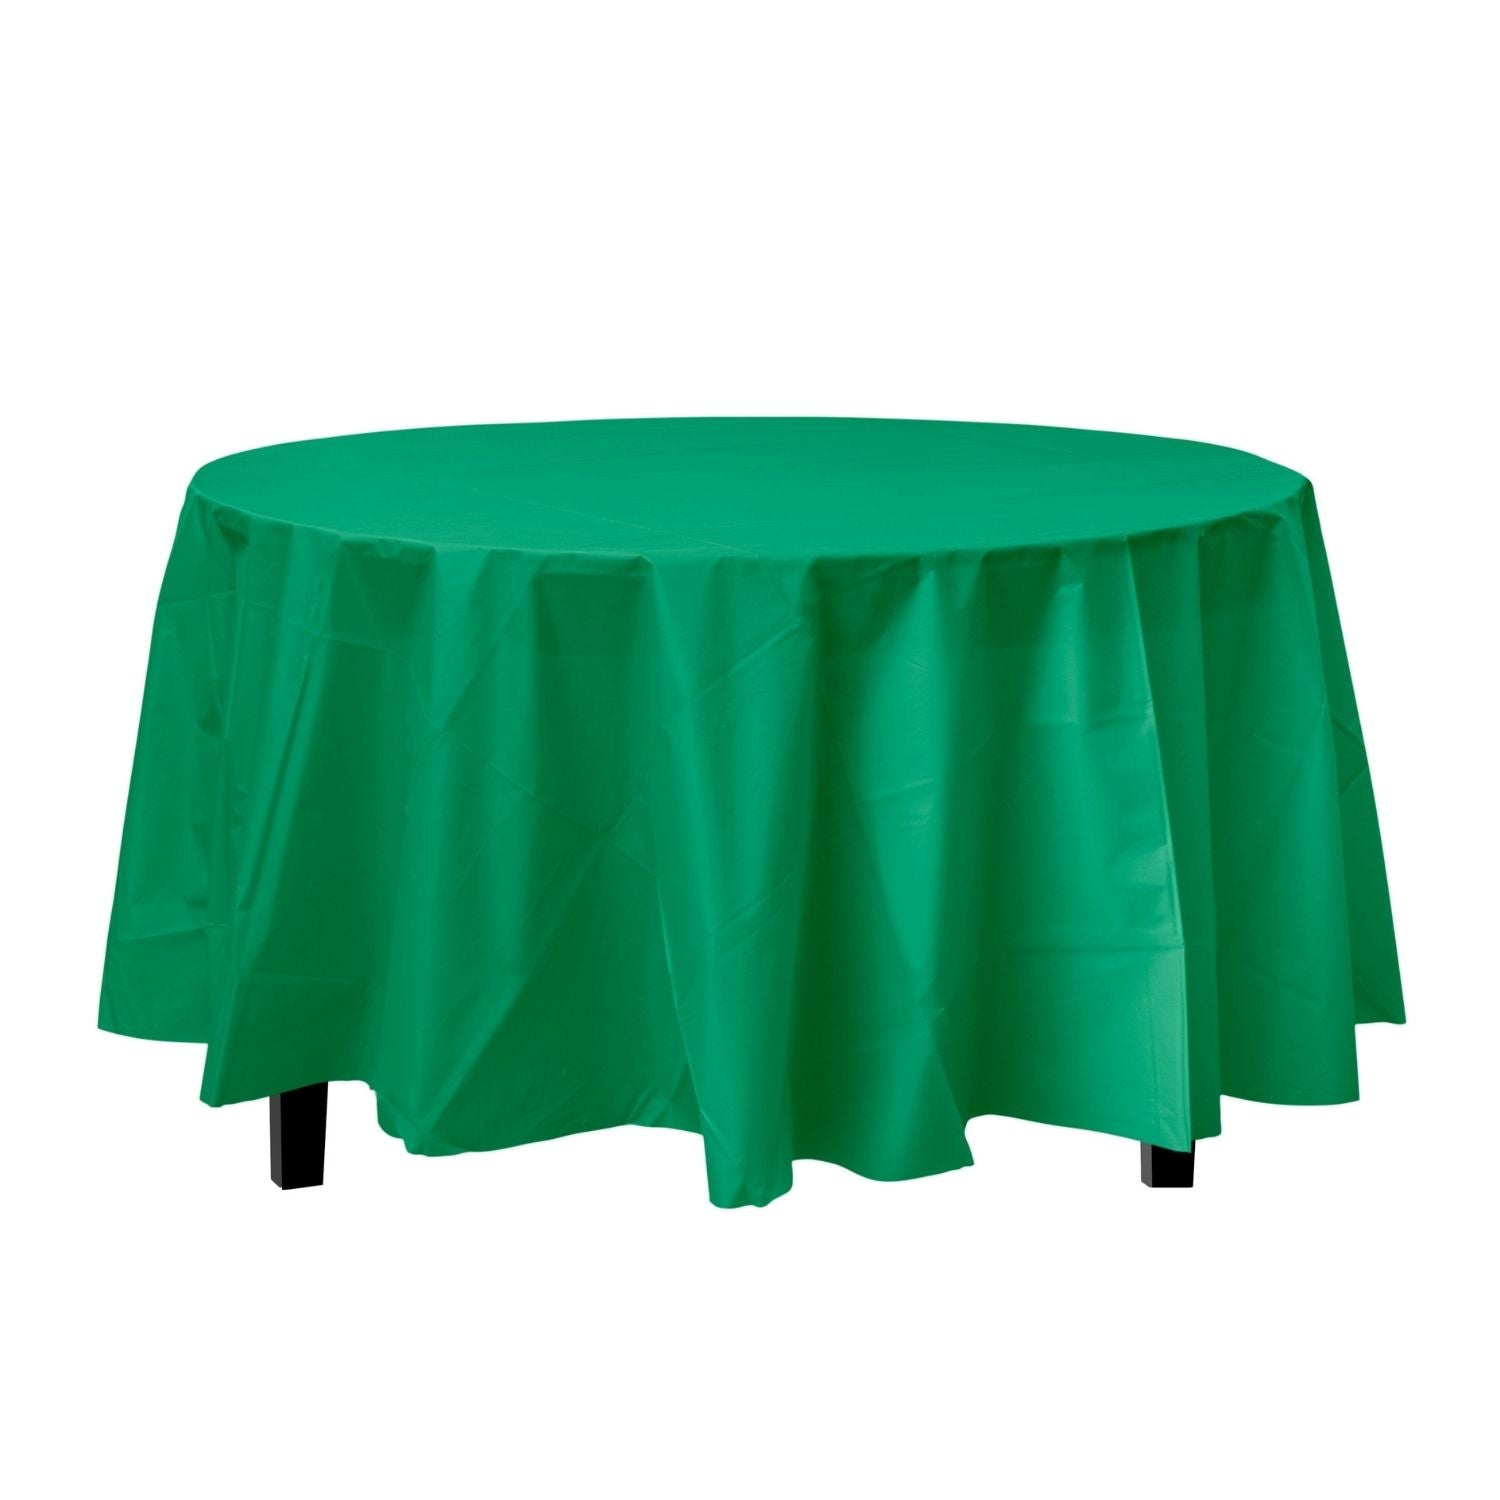 Premium Round Emerald Green Plastic Tablecloth | 96 Count - Yom Tov Settings